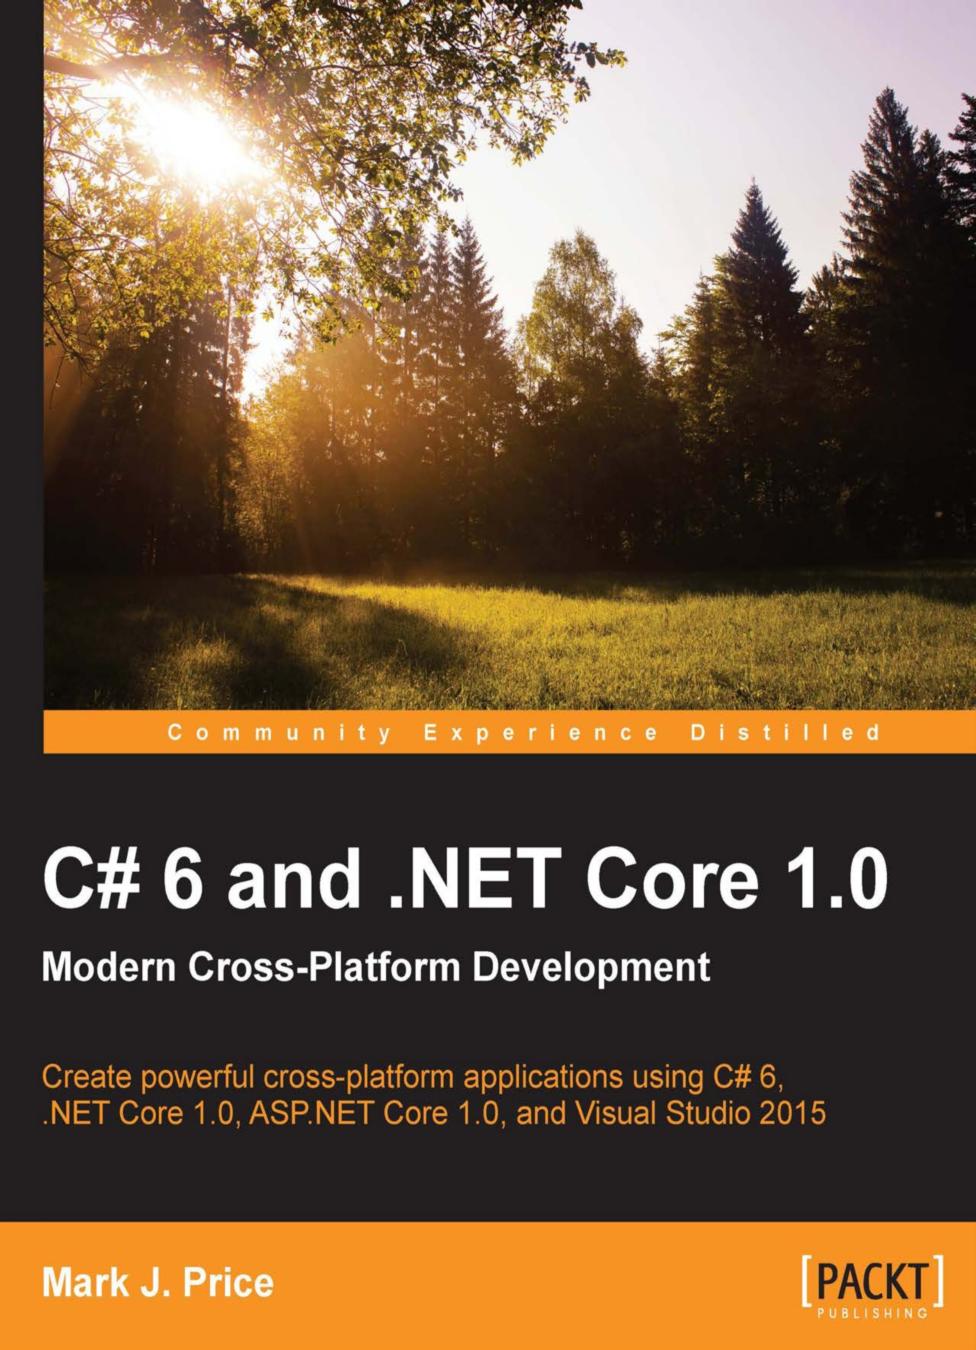 C# 6 and .NET Core 1.0: Modern Cross-Platform Development by Mark J. Price